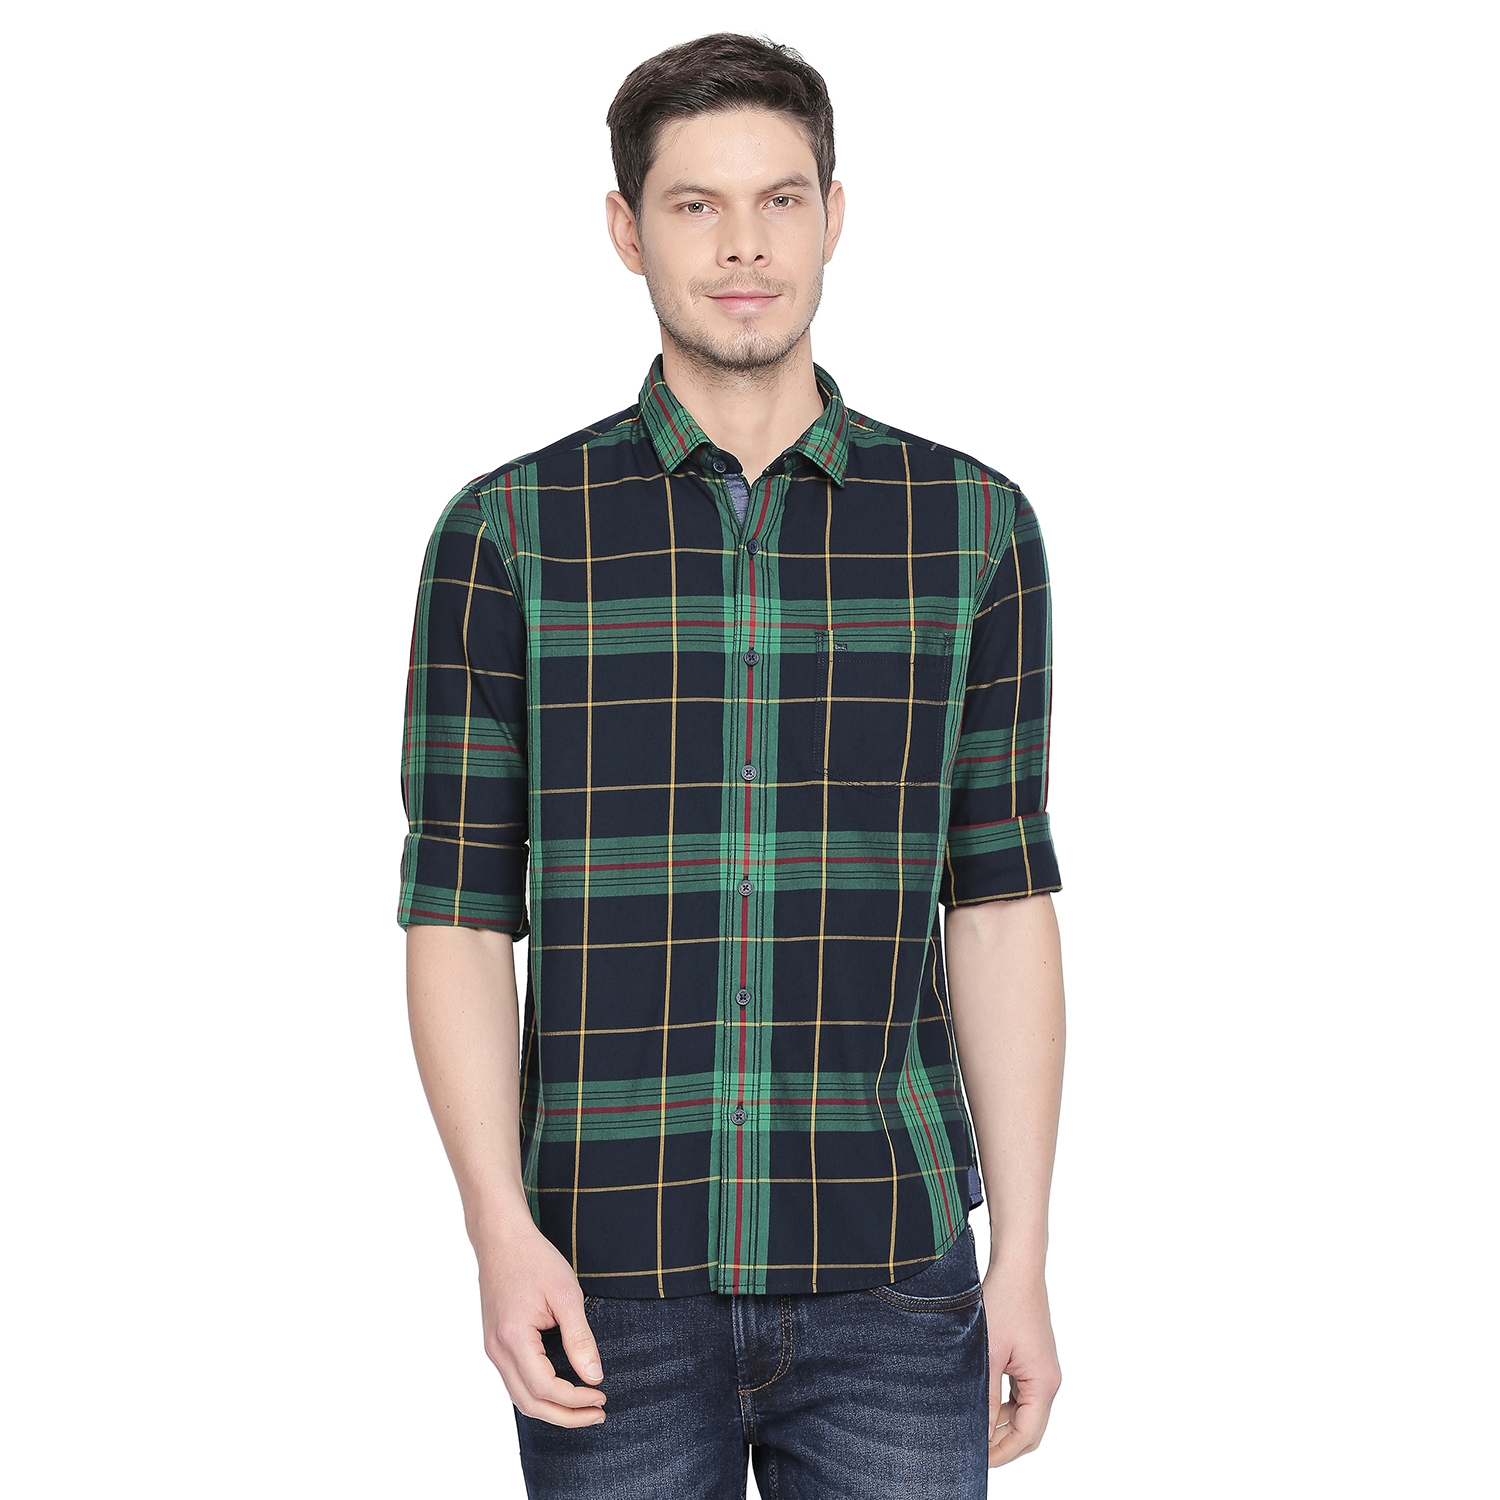 Basics | Basics Slim Fit Fern Green Twill Checks Shirt